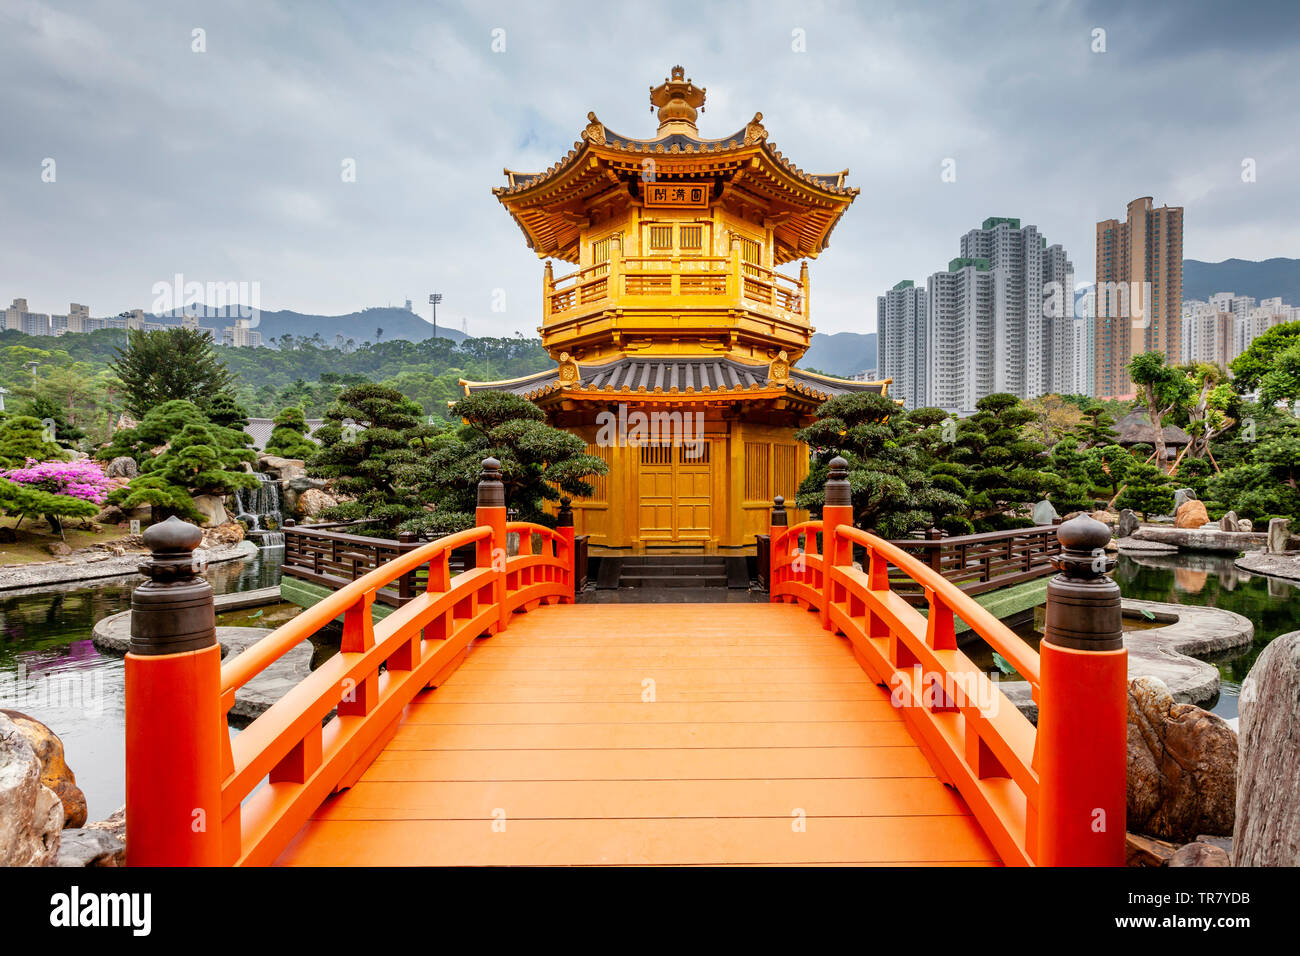 Pavilion Of Absolute Perfection, Nan Lian Garden, Hong Kong, China Stock Photo